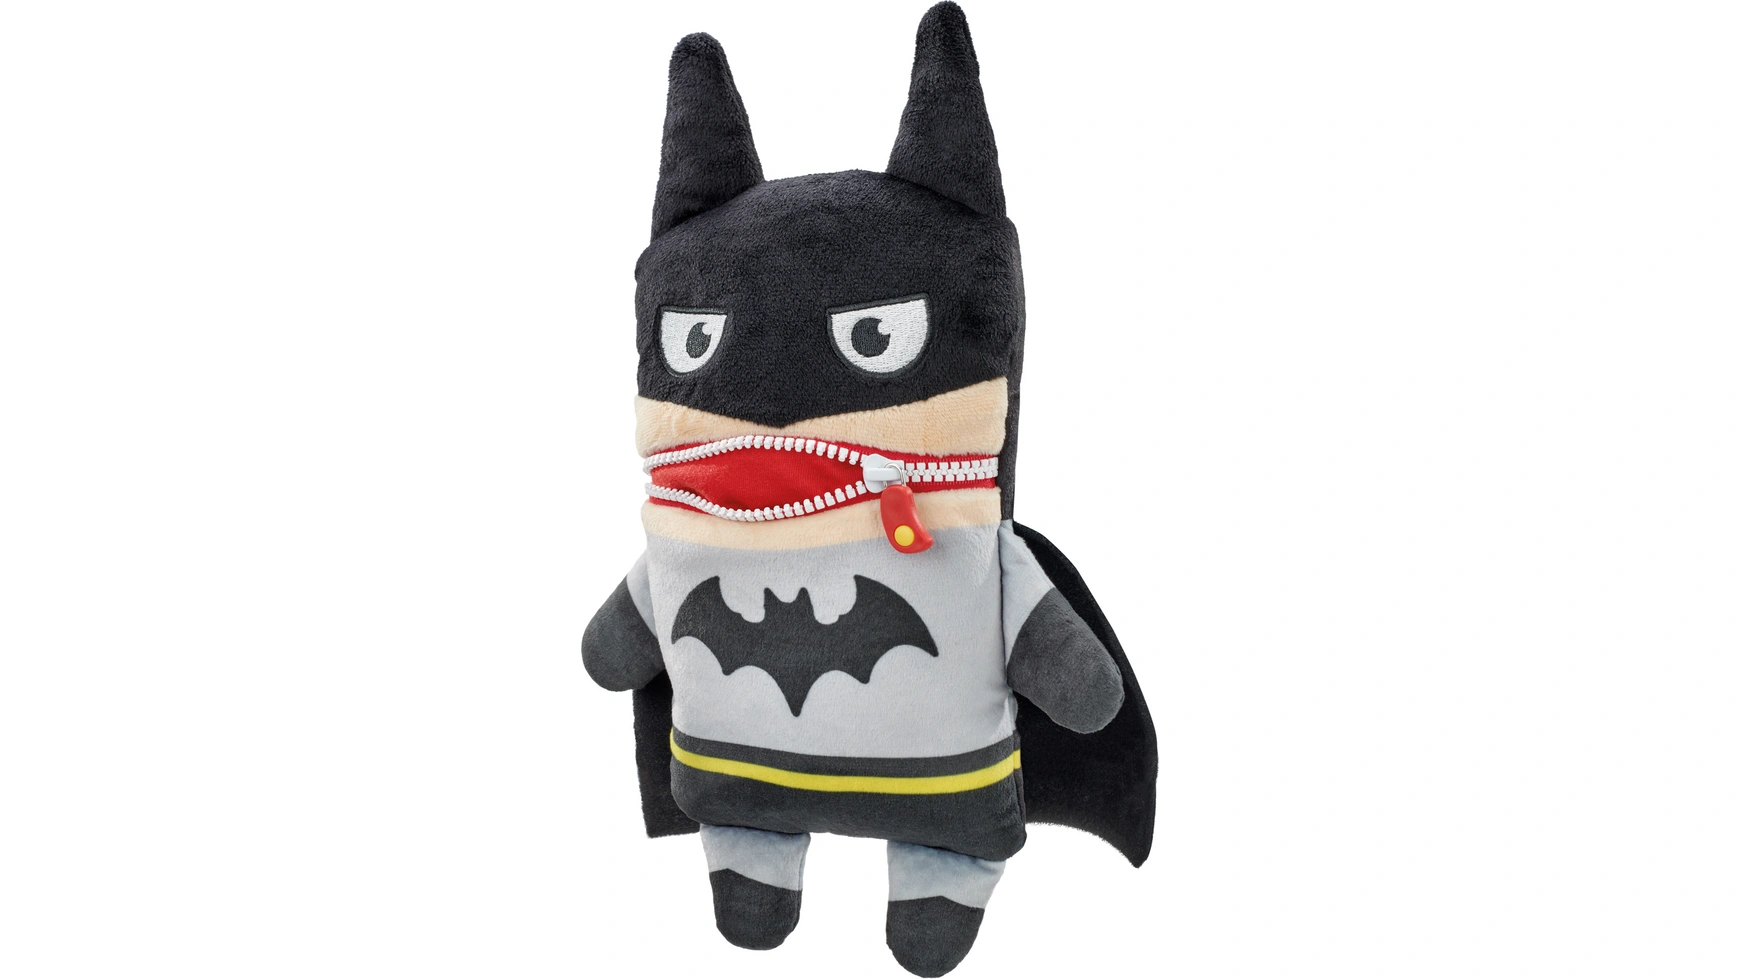 Schmidt Spiele Worry Eater DC Super Hero: Worry Eater, Бэтмен, 29 см коллекционная фигурка плюшевая игрушка бэтмен